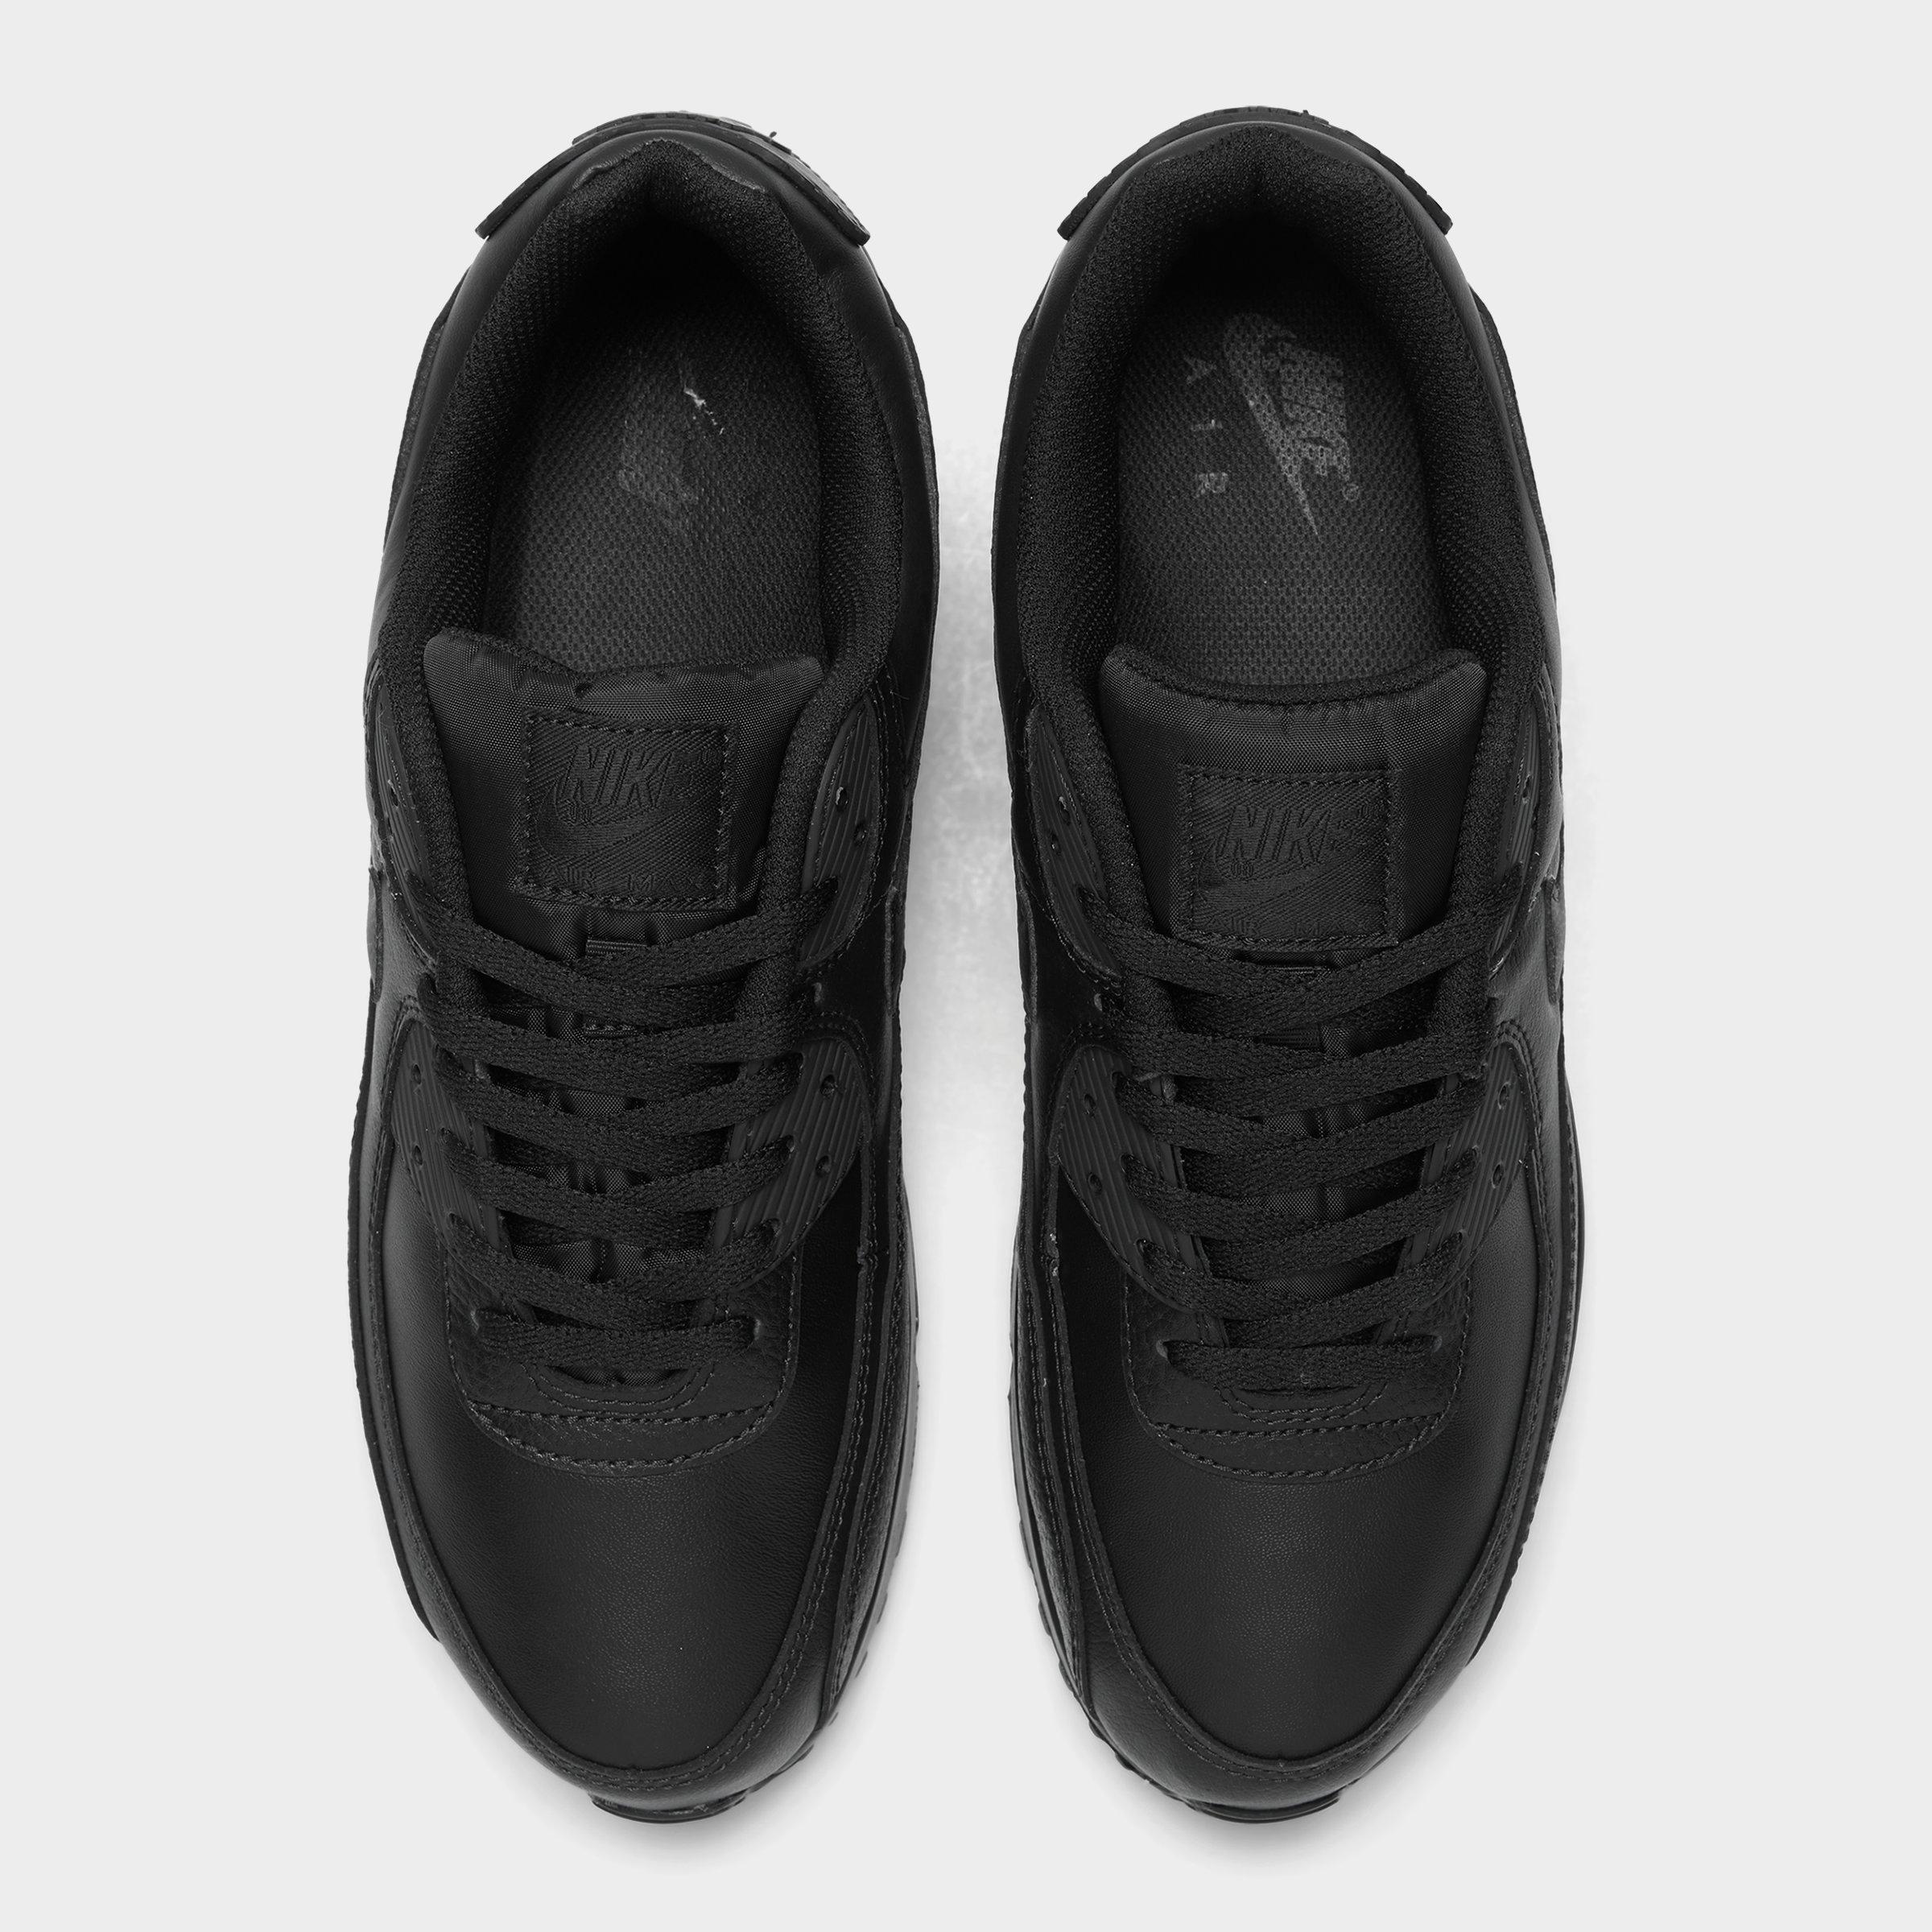 black nike leather sneakers